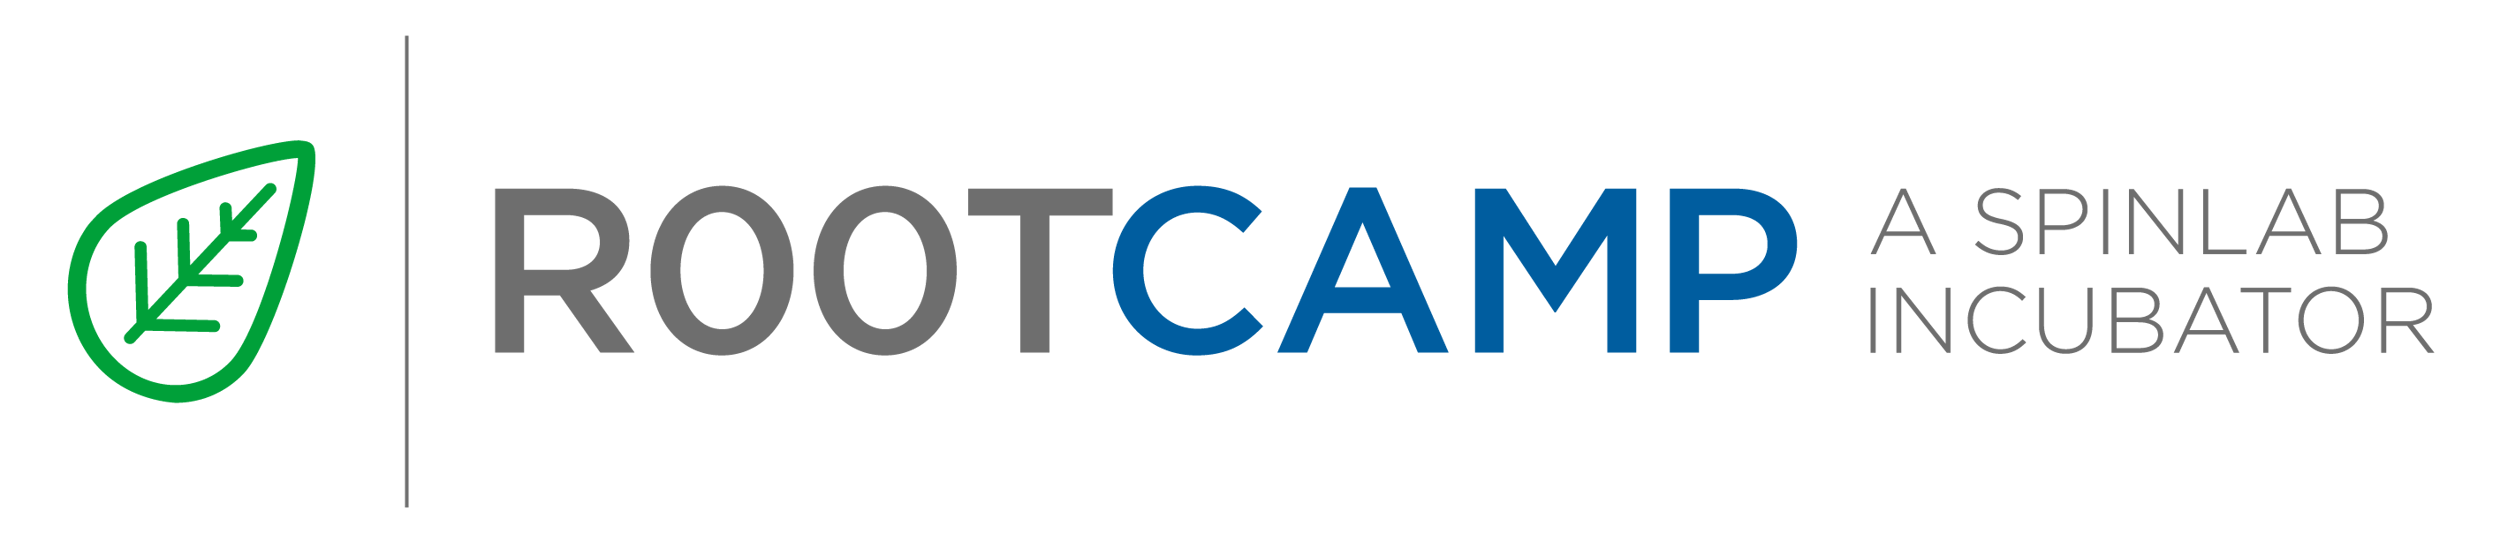 rootcamp_logo